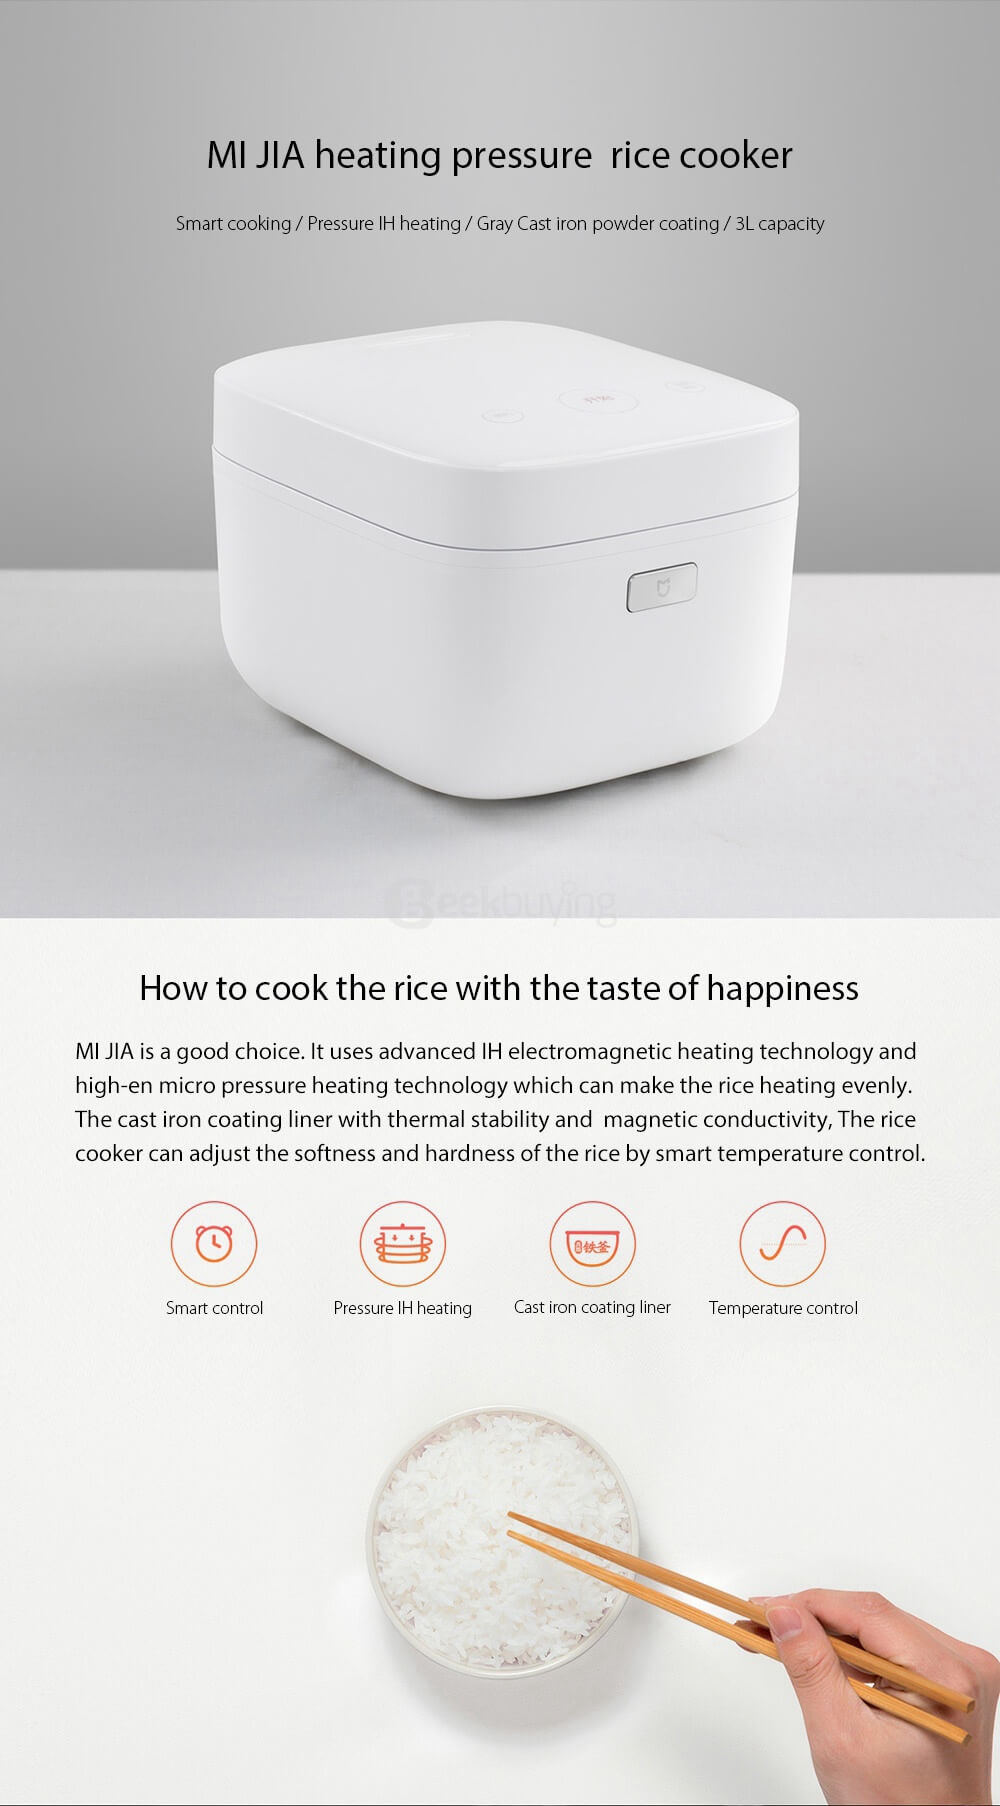 Original Xiaomi Mi Rice Cooker Mi Jia Induction Heating Pressure Rice Cooker Smart Control Ih Heating 3.0L Capacity - White